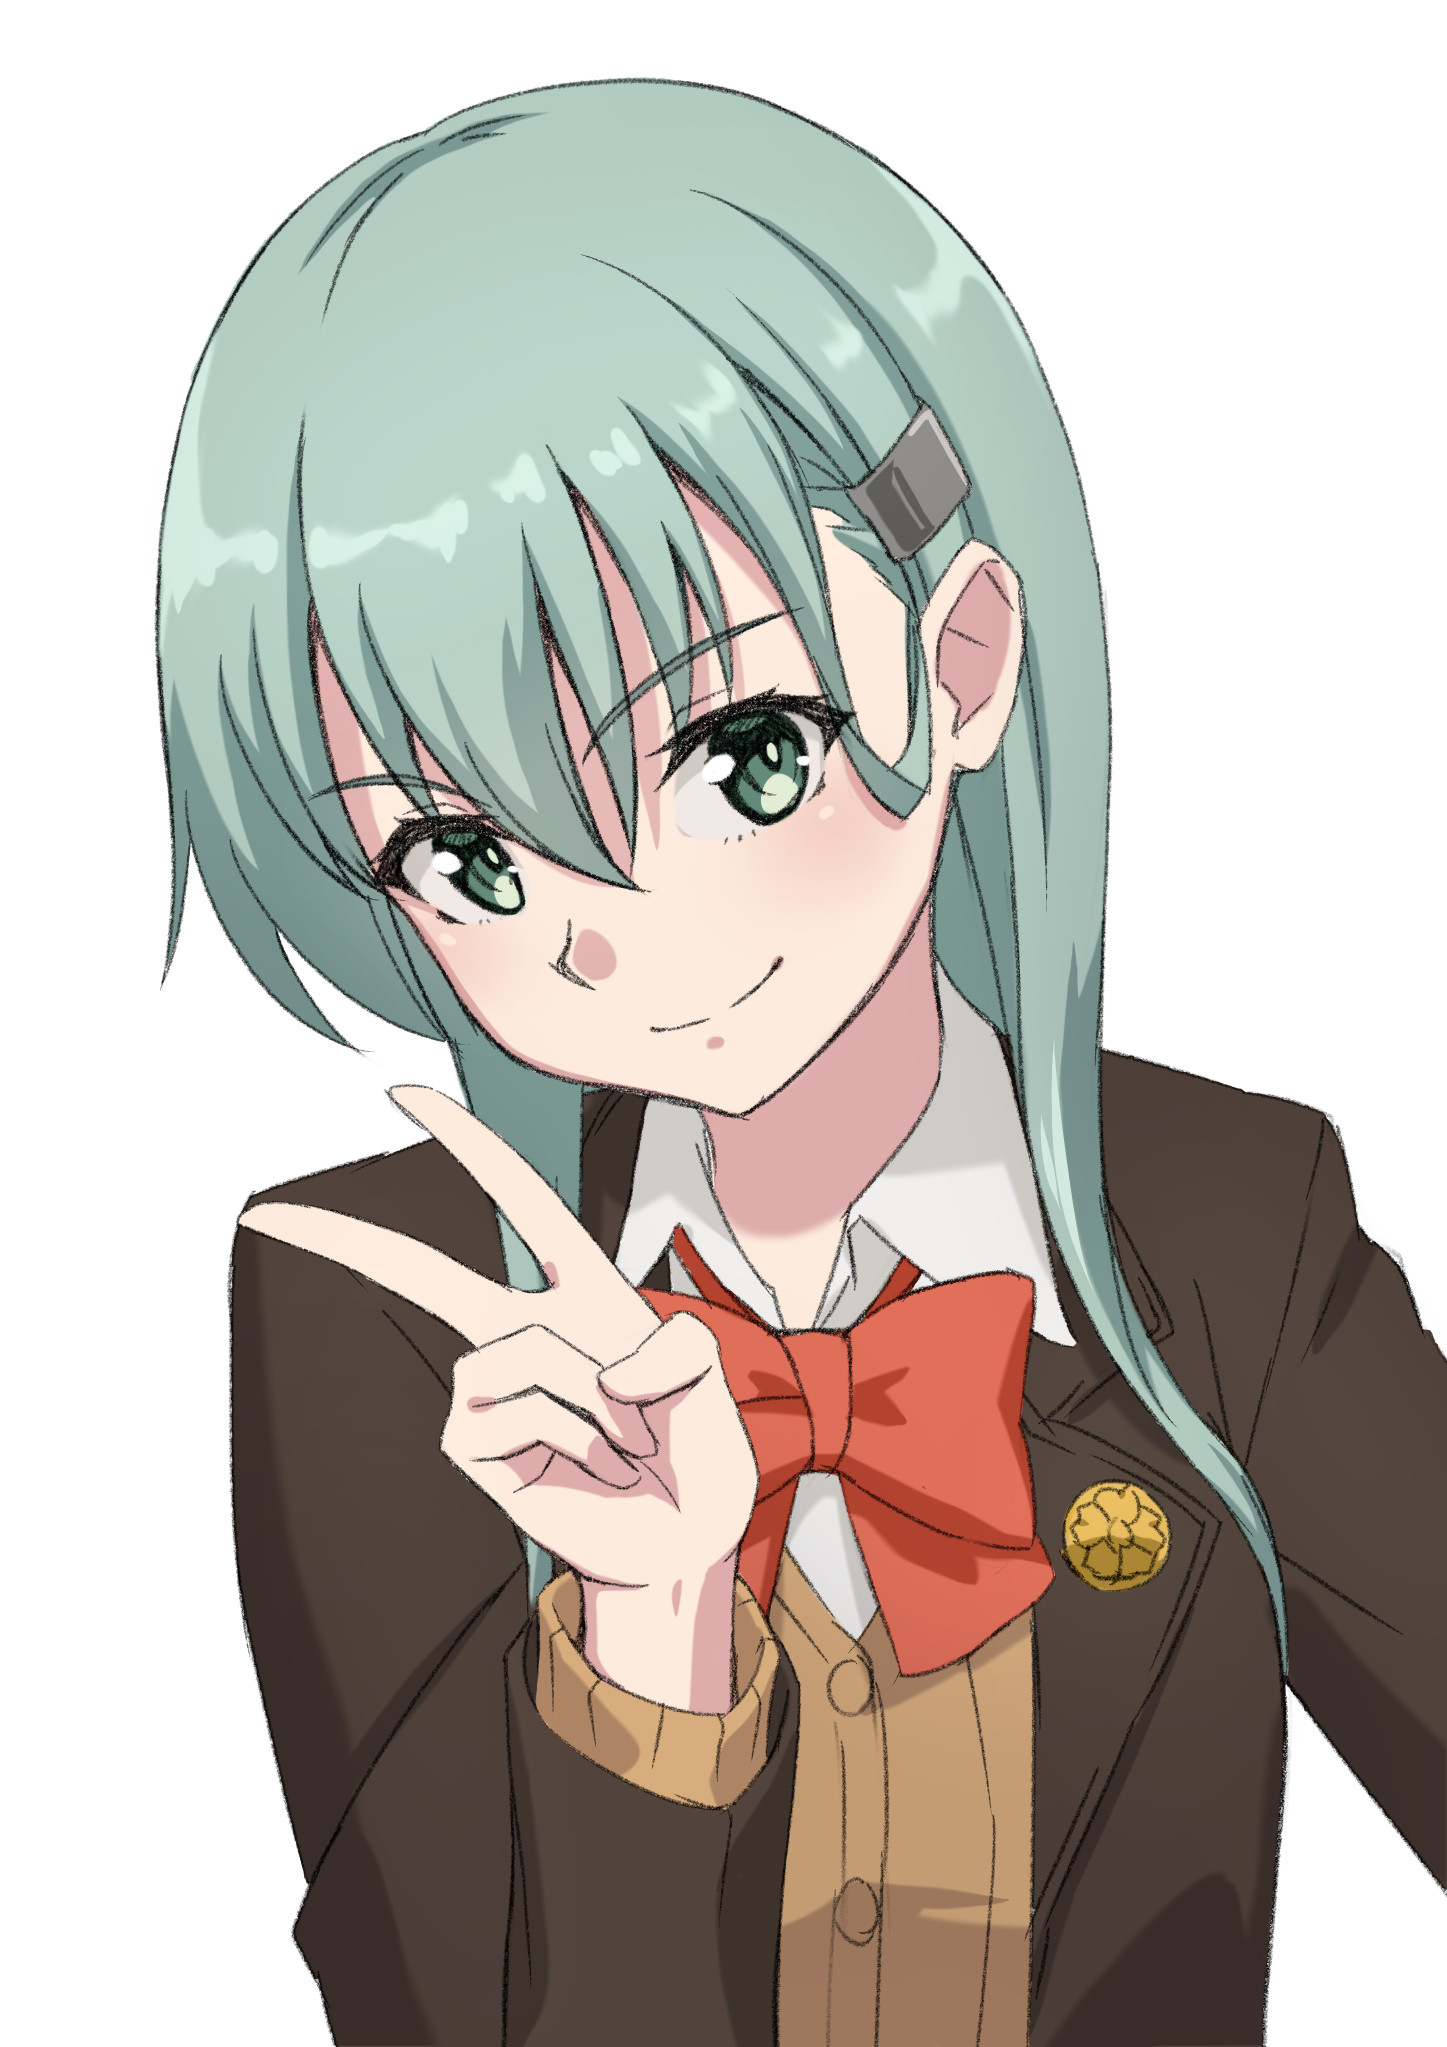 Anime 1447x2047 anime anime girls Kantai Collection Suzuya (KanColle) long hair green hair school uniform artwork digital art fan art